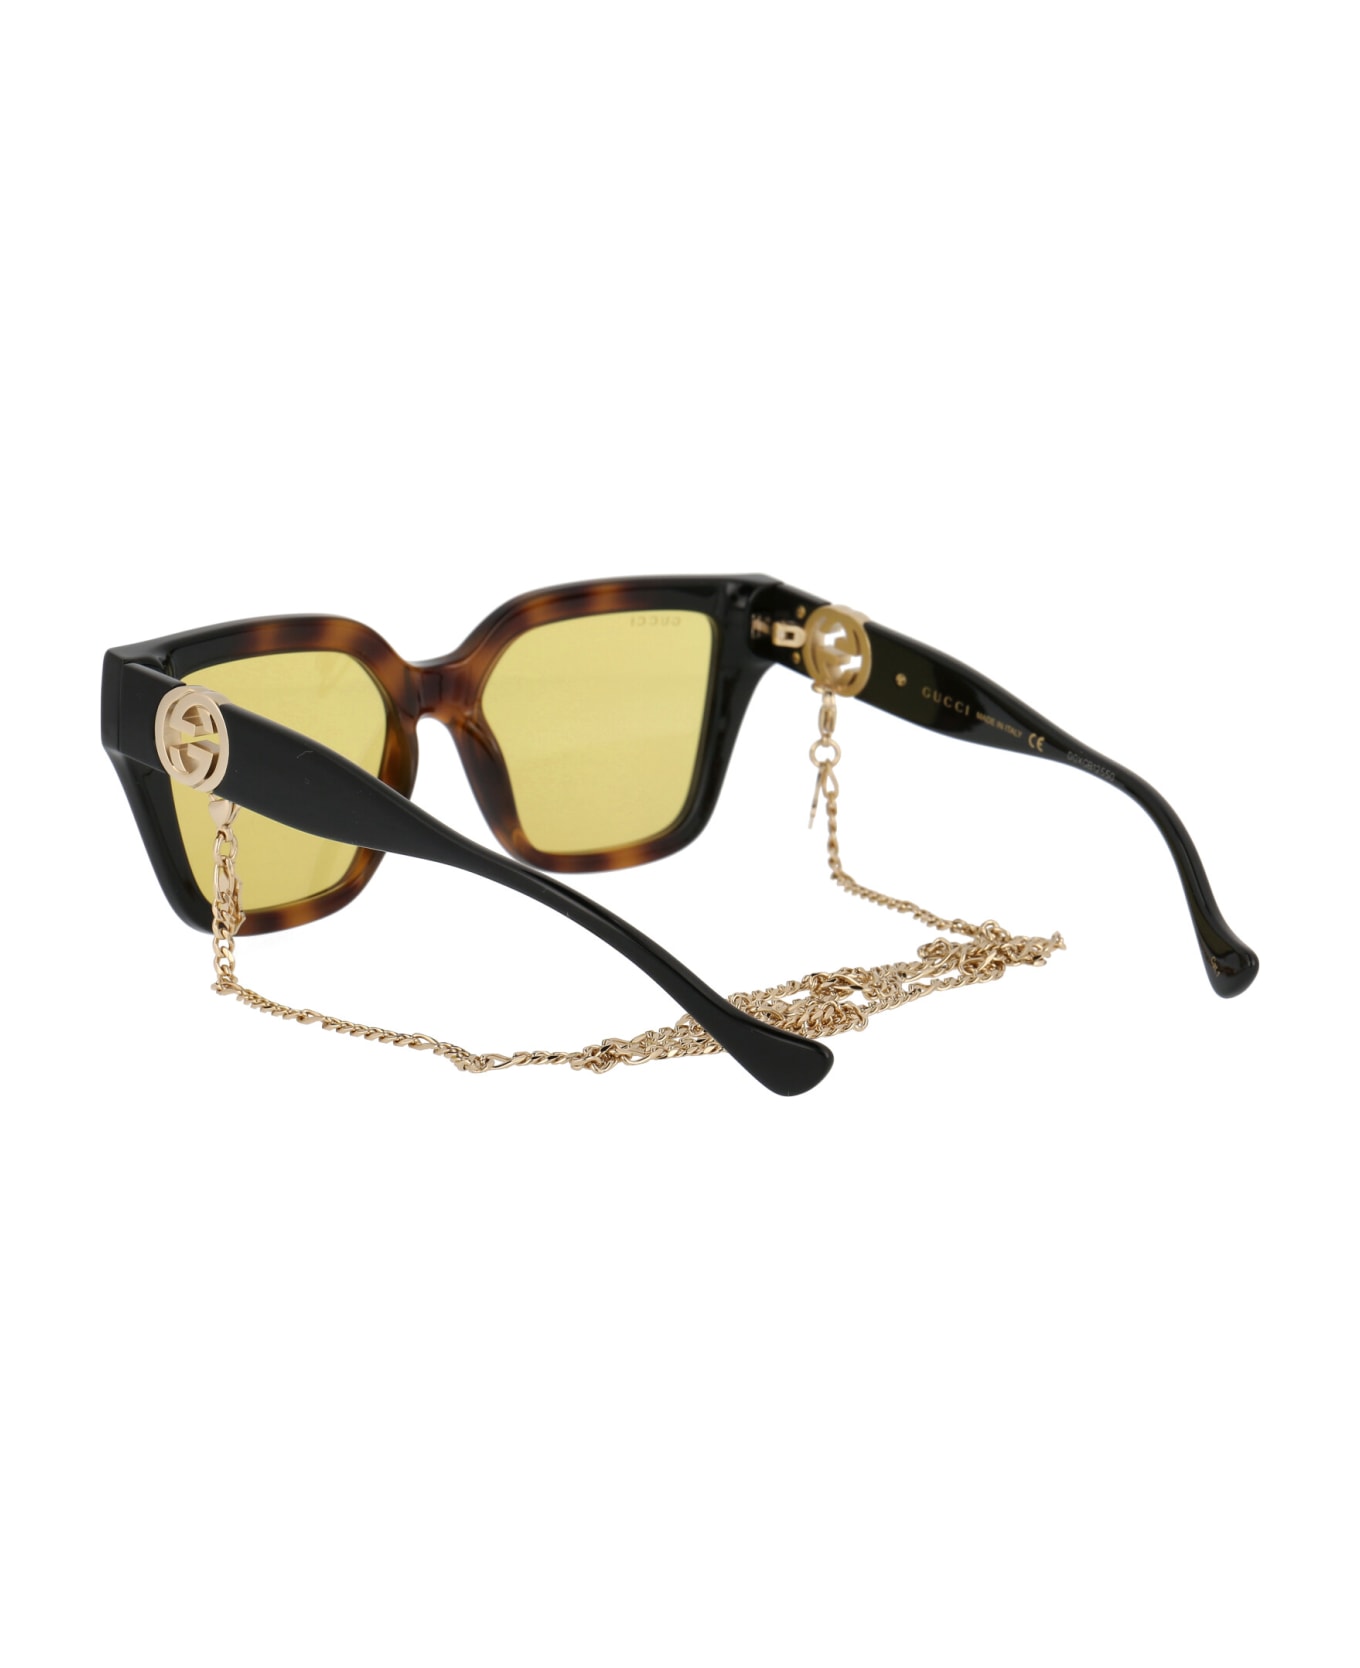 Gucci Eyewear Gg1023s Sunglasses - 004 HAVANA BLACK YELLOW